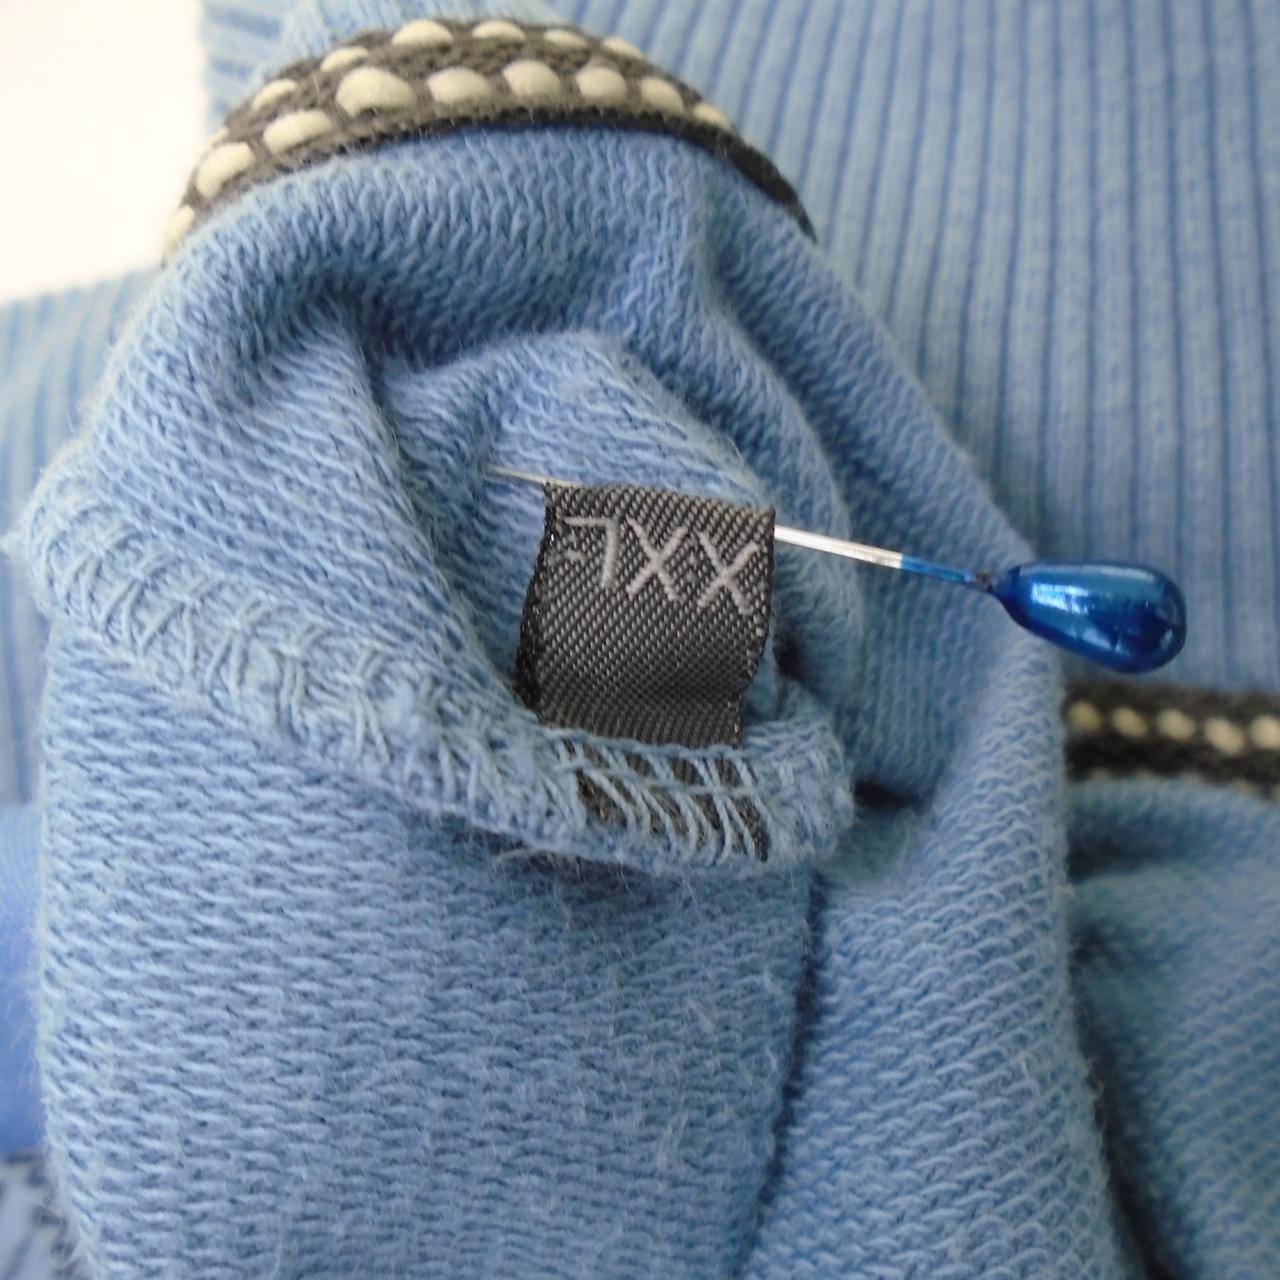 Men's Sweatshirt Monte carlo. Blue. XXL. Used. Good